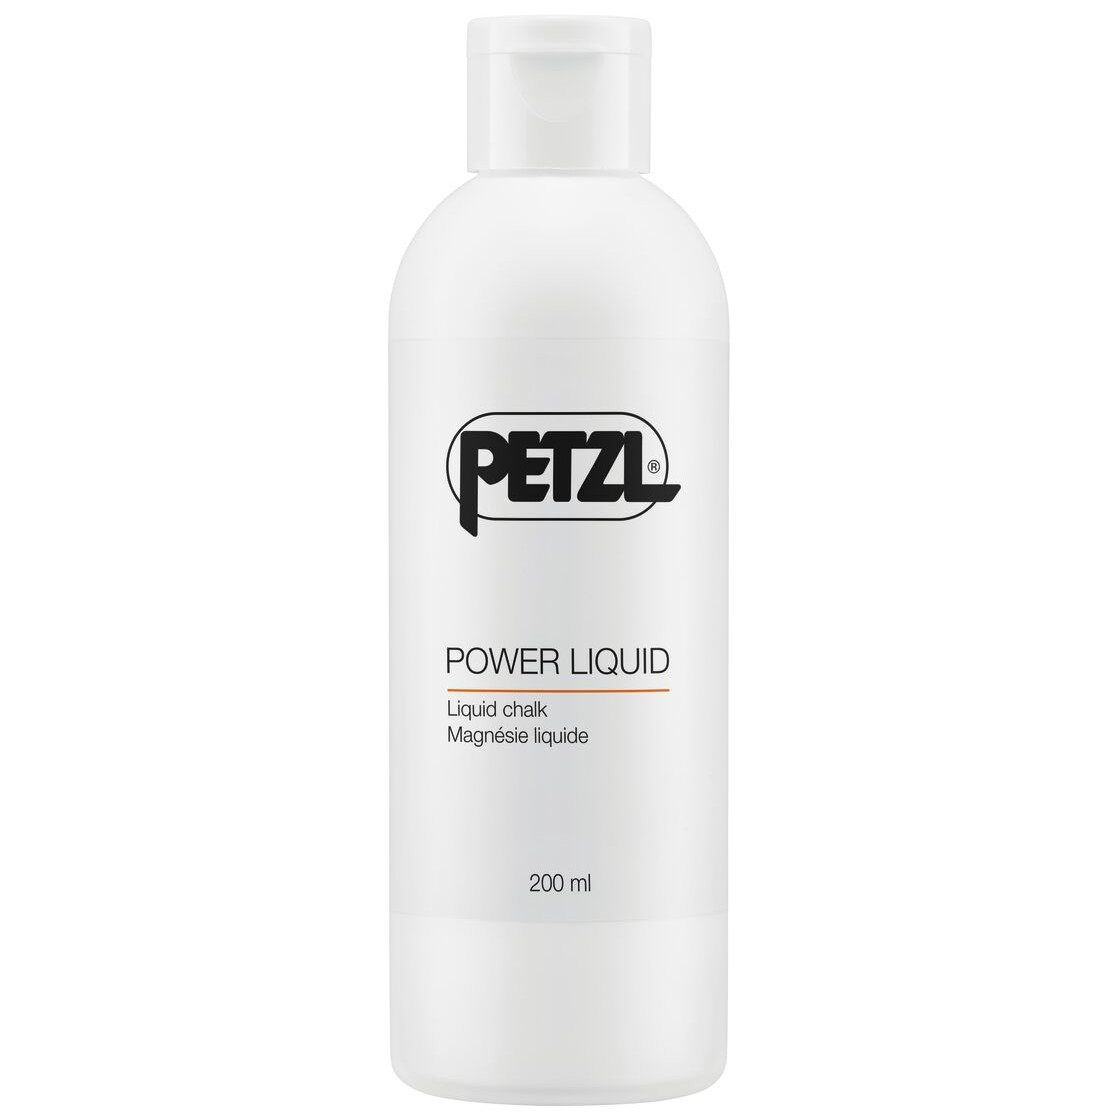 Productfoto van Petzl Power Liquid Chalk - 200ml